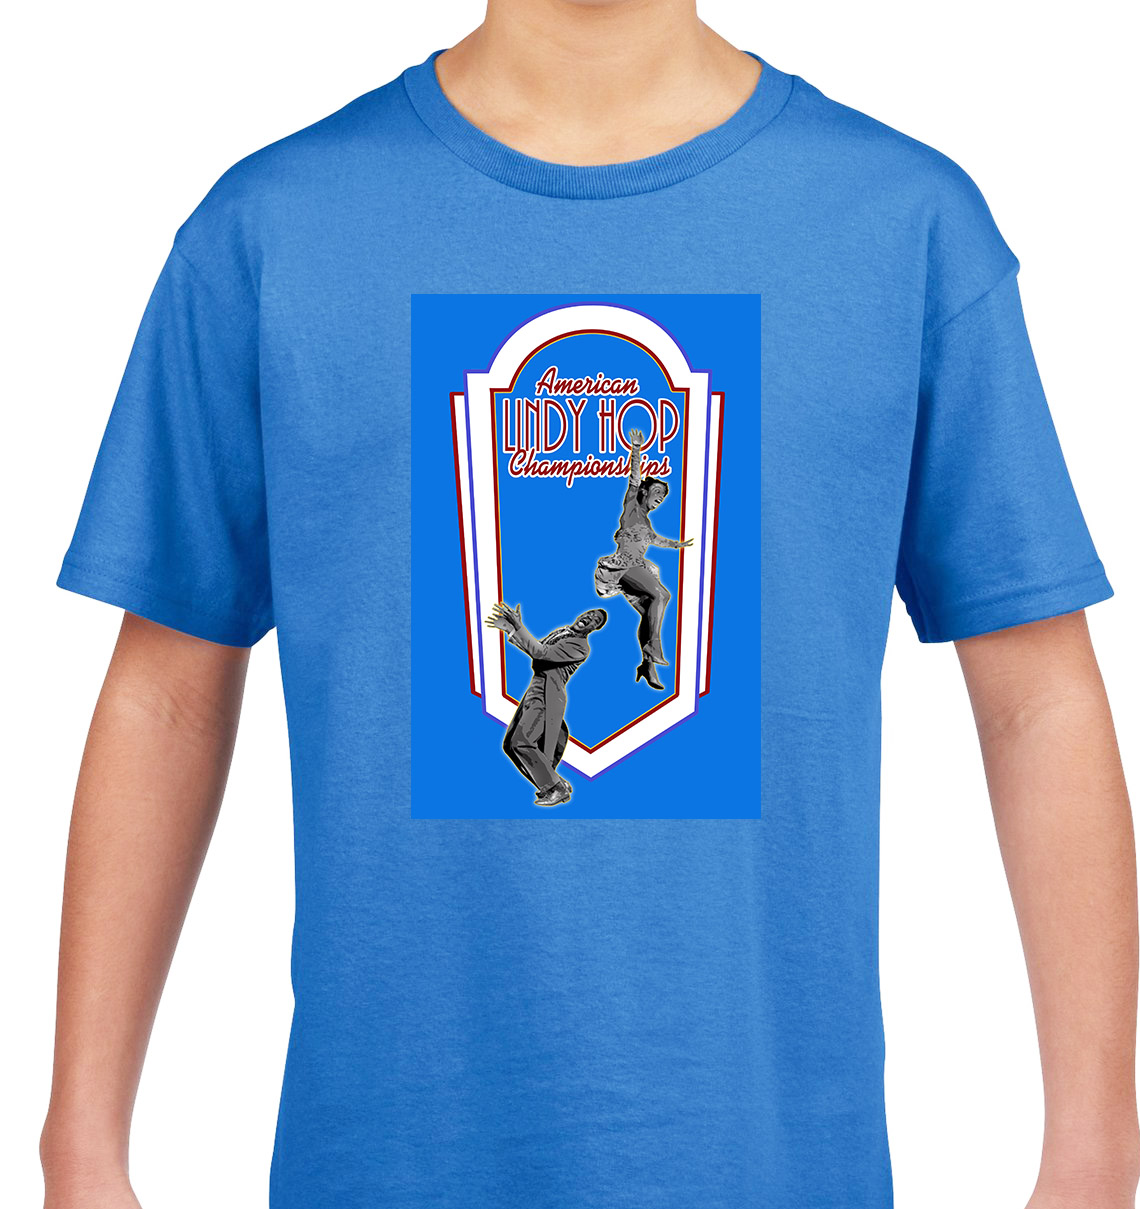 ALHC logo t-shirt in blue